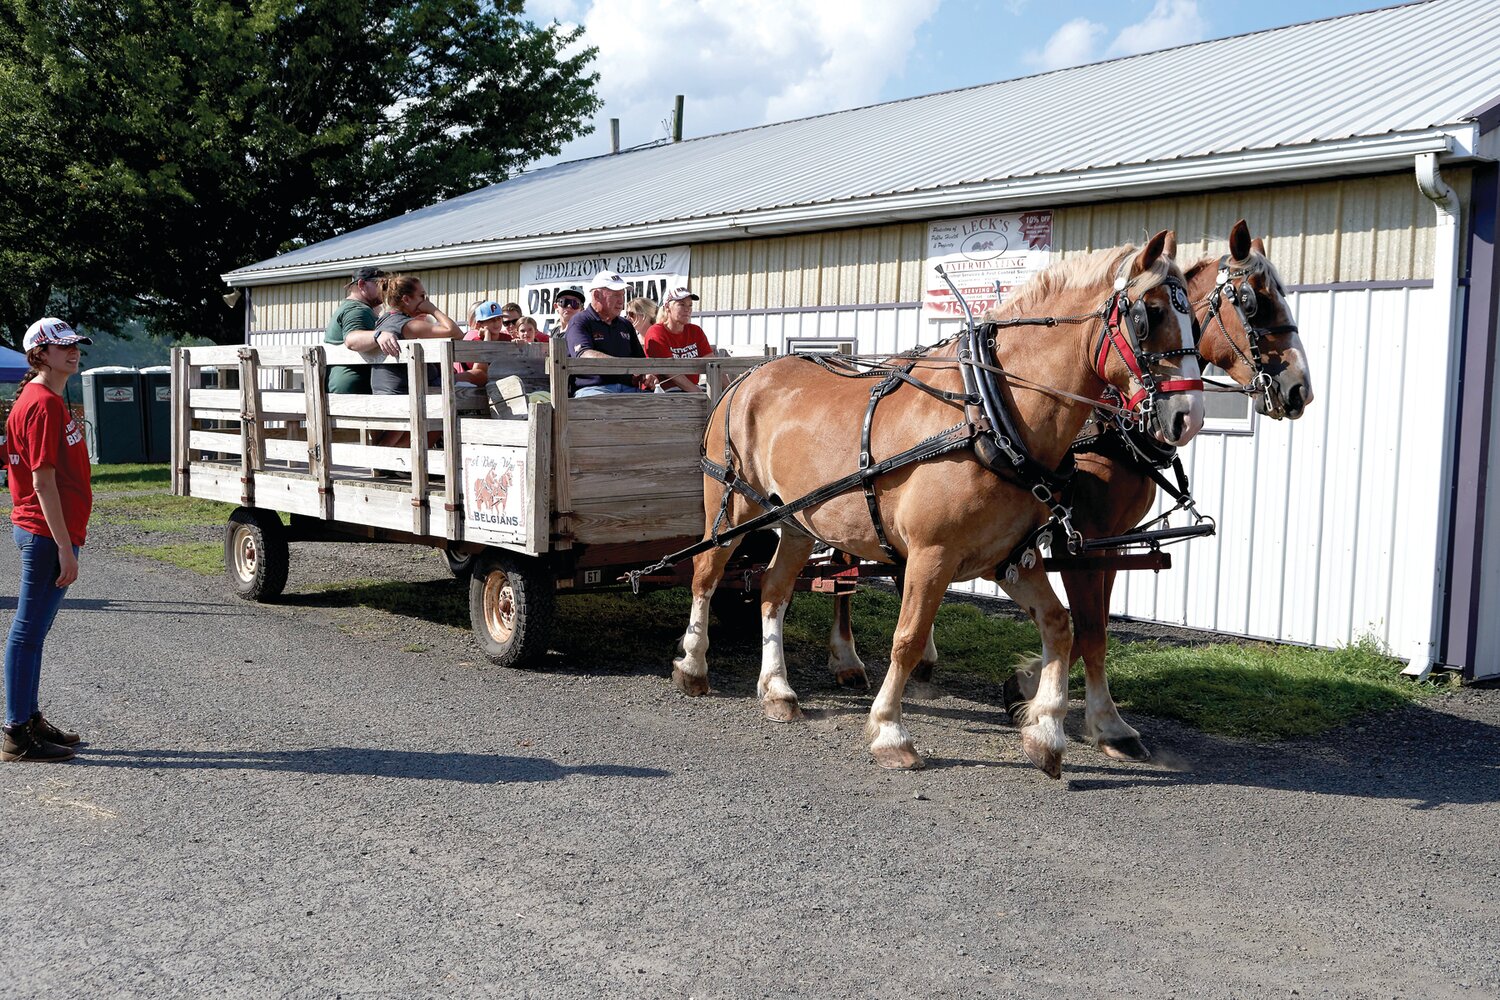 Middletown Grange Fair attendees ride a horse-drawn wagon Aug. 17.